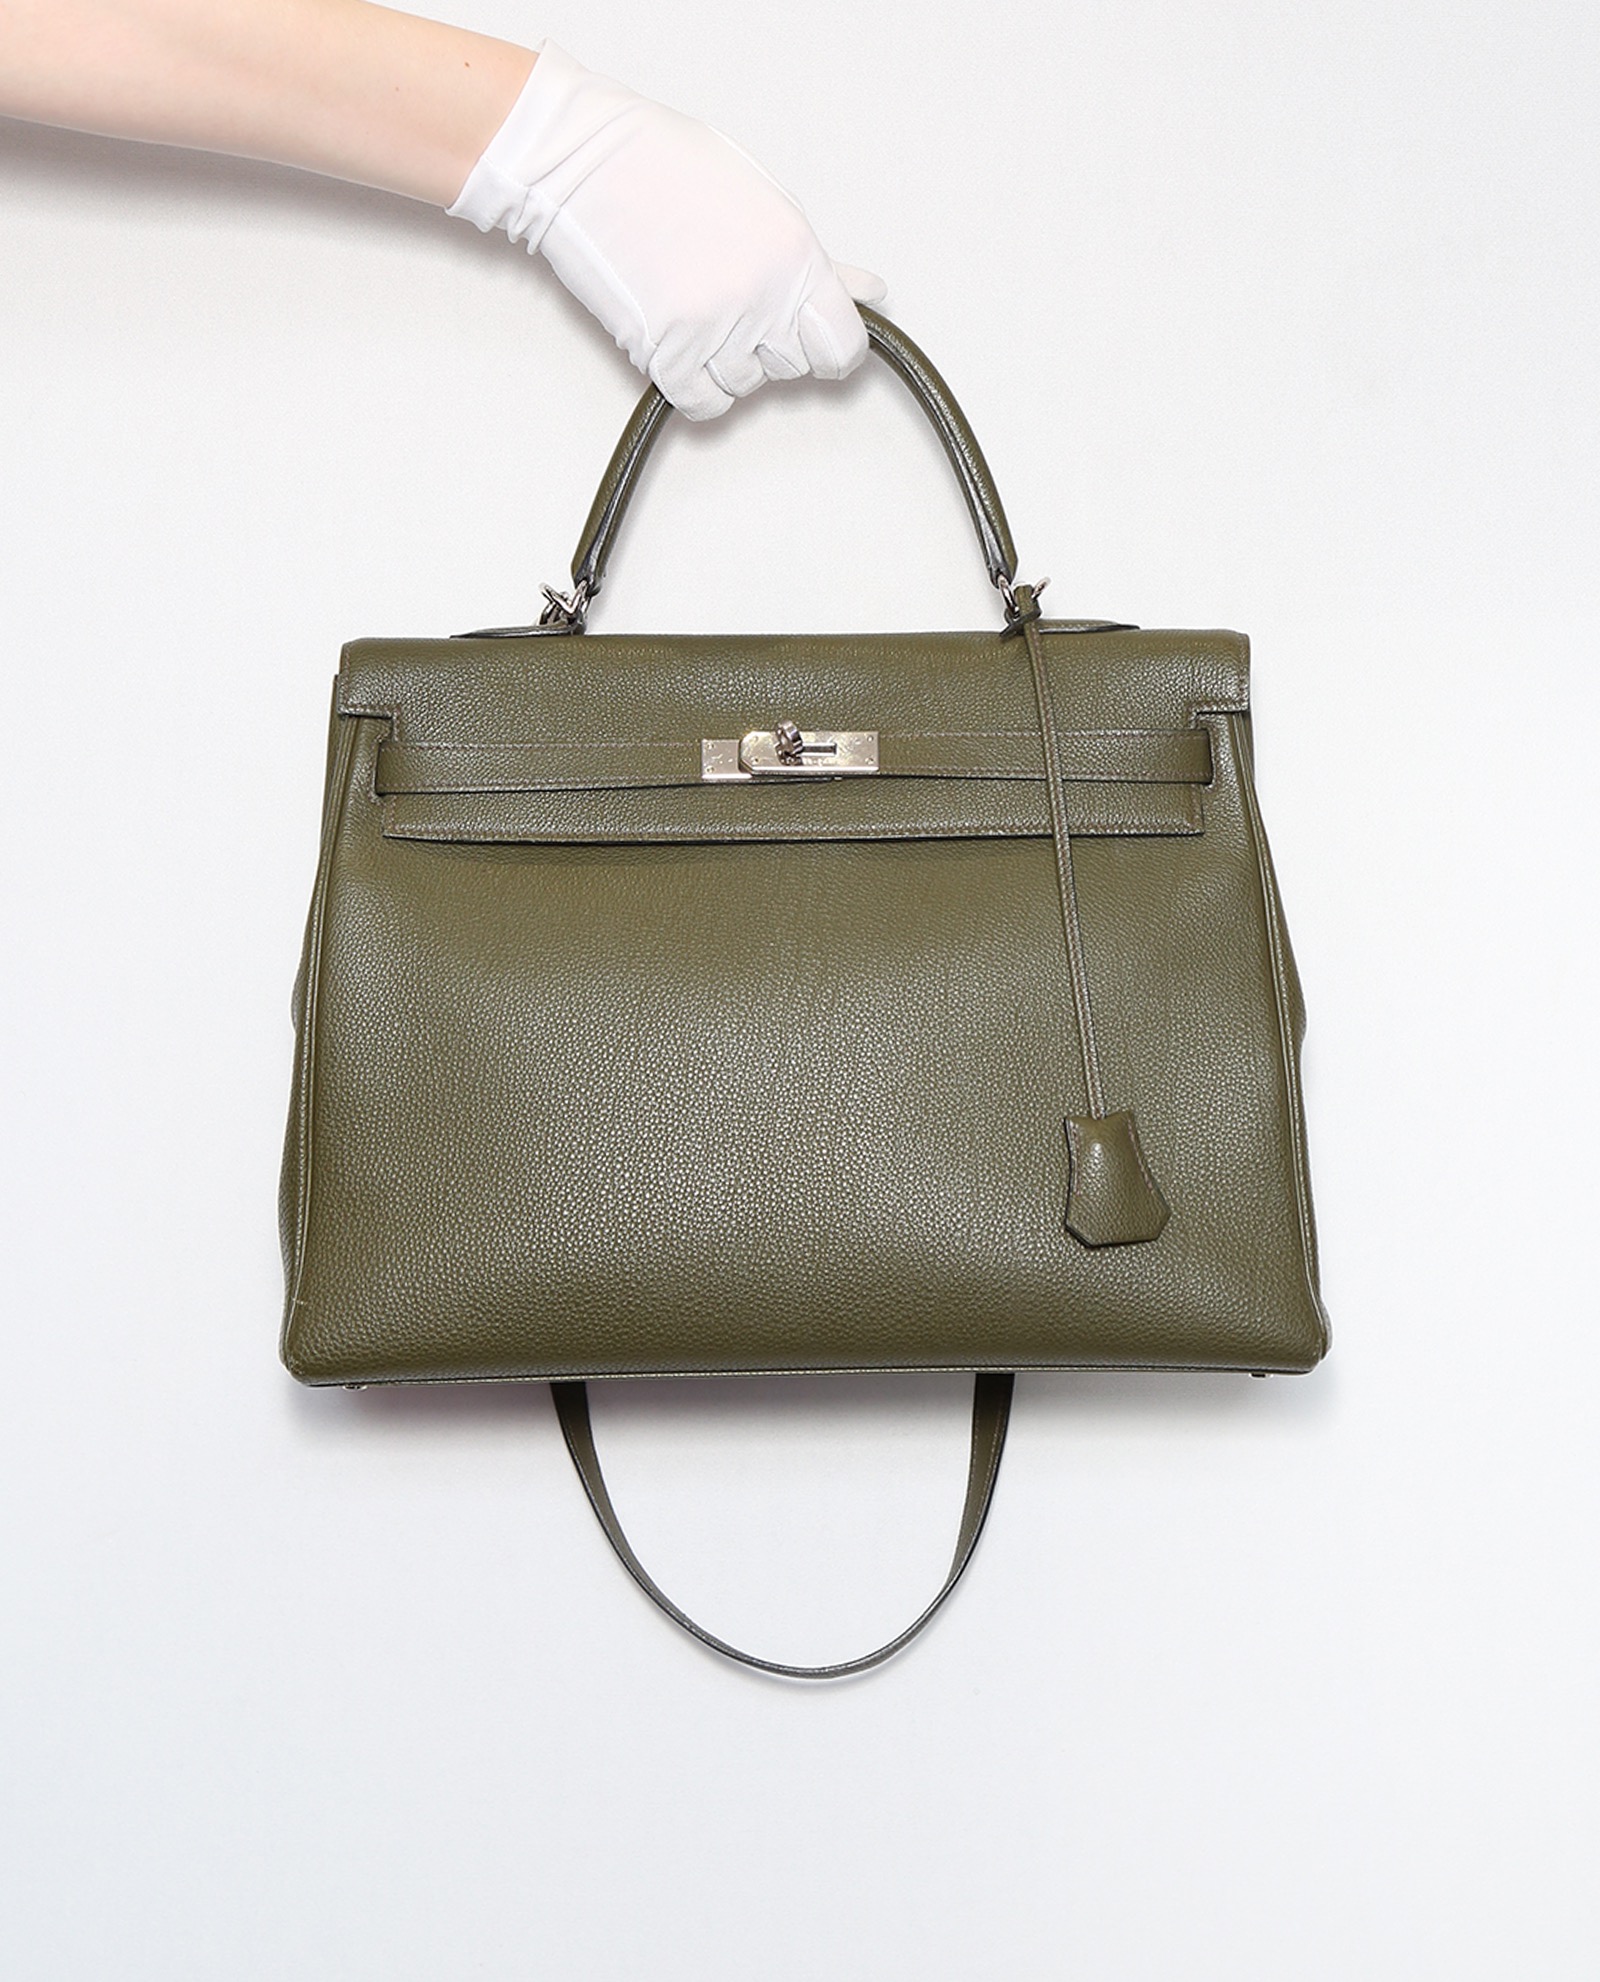 Hermes Kelly woman handbag Togo grainy leather 32cm olive green